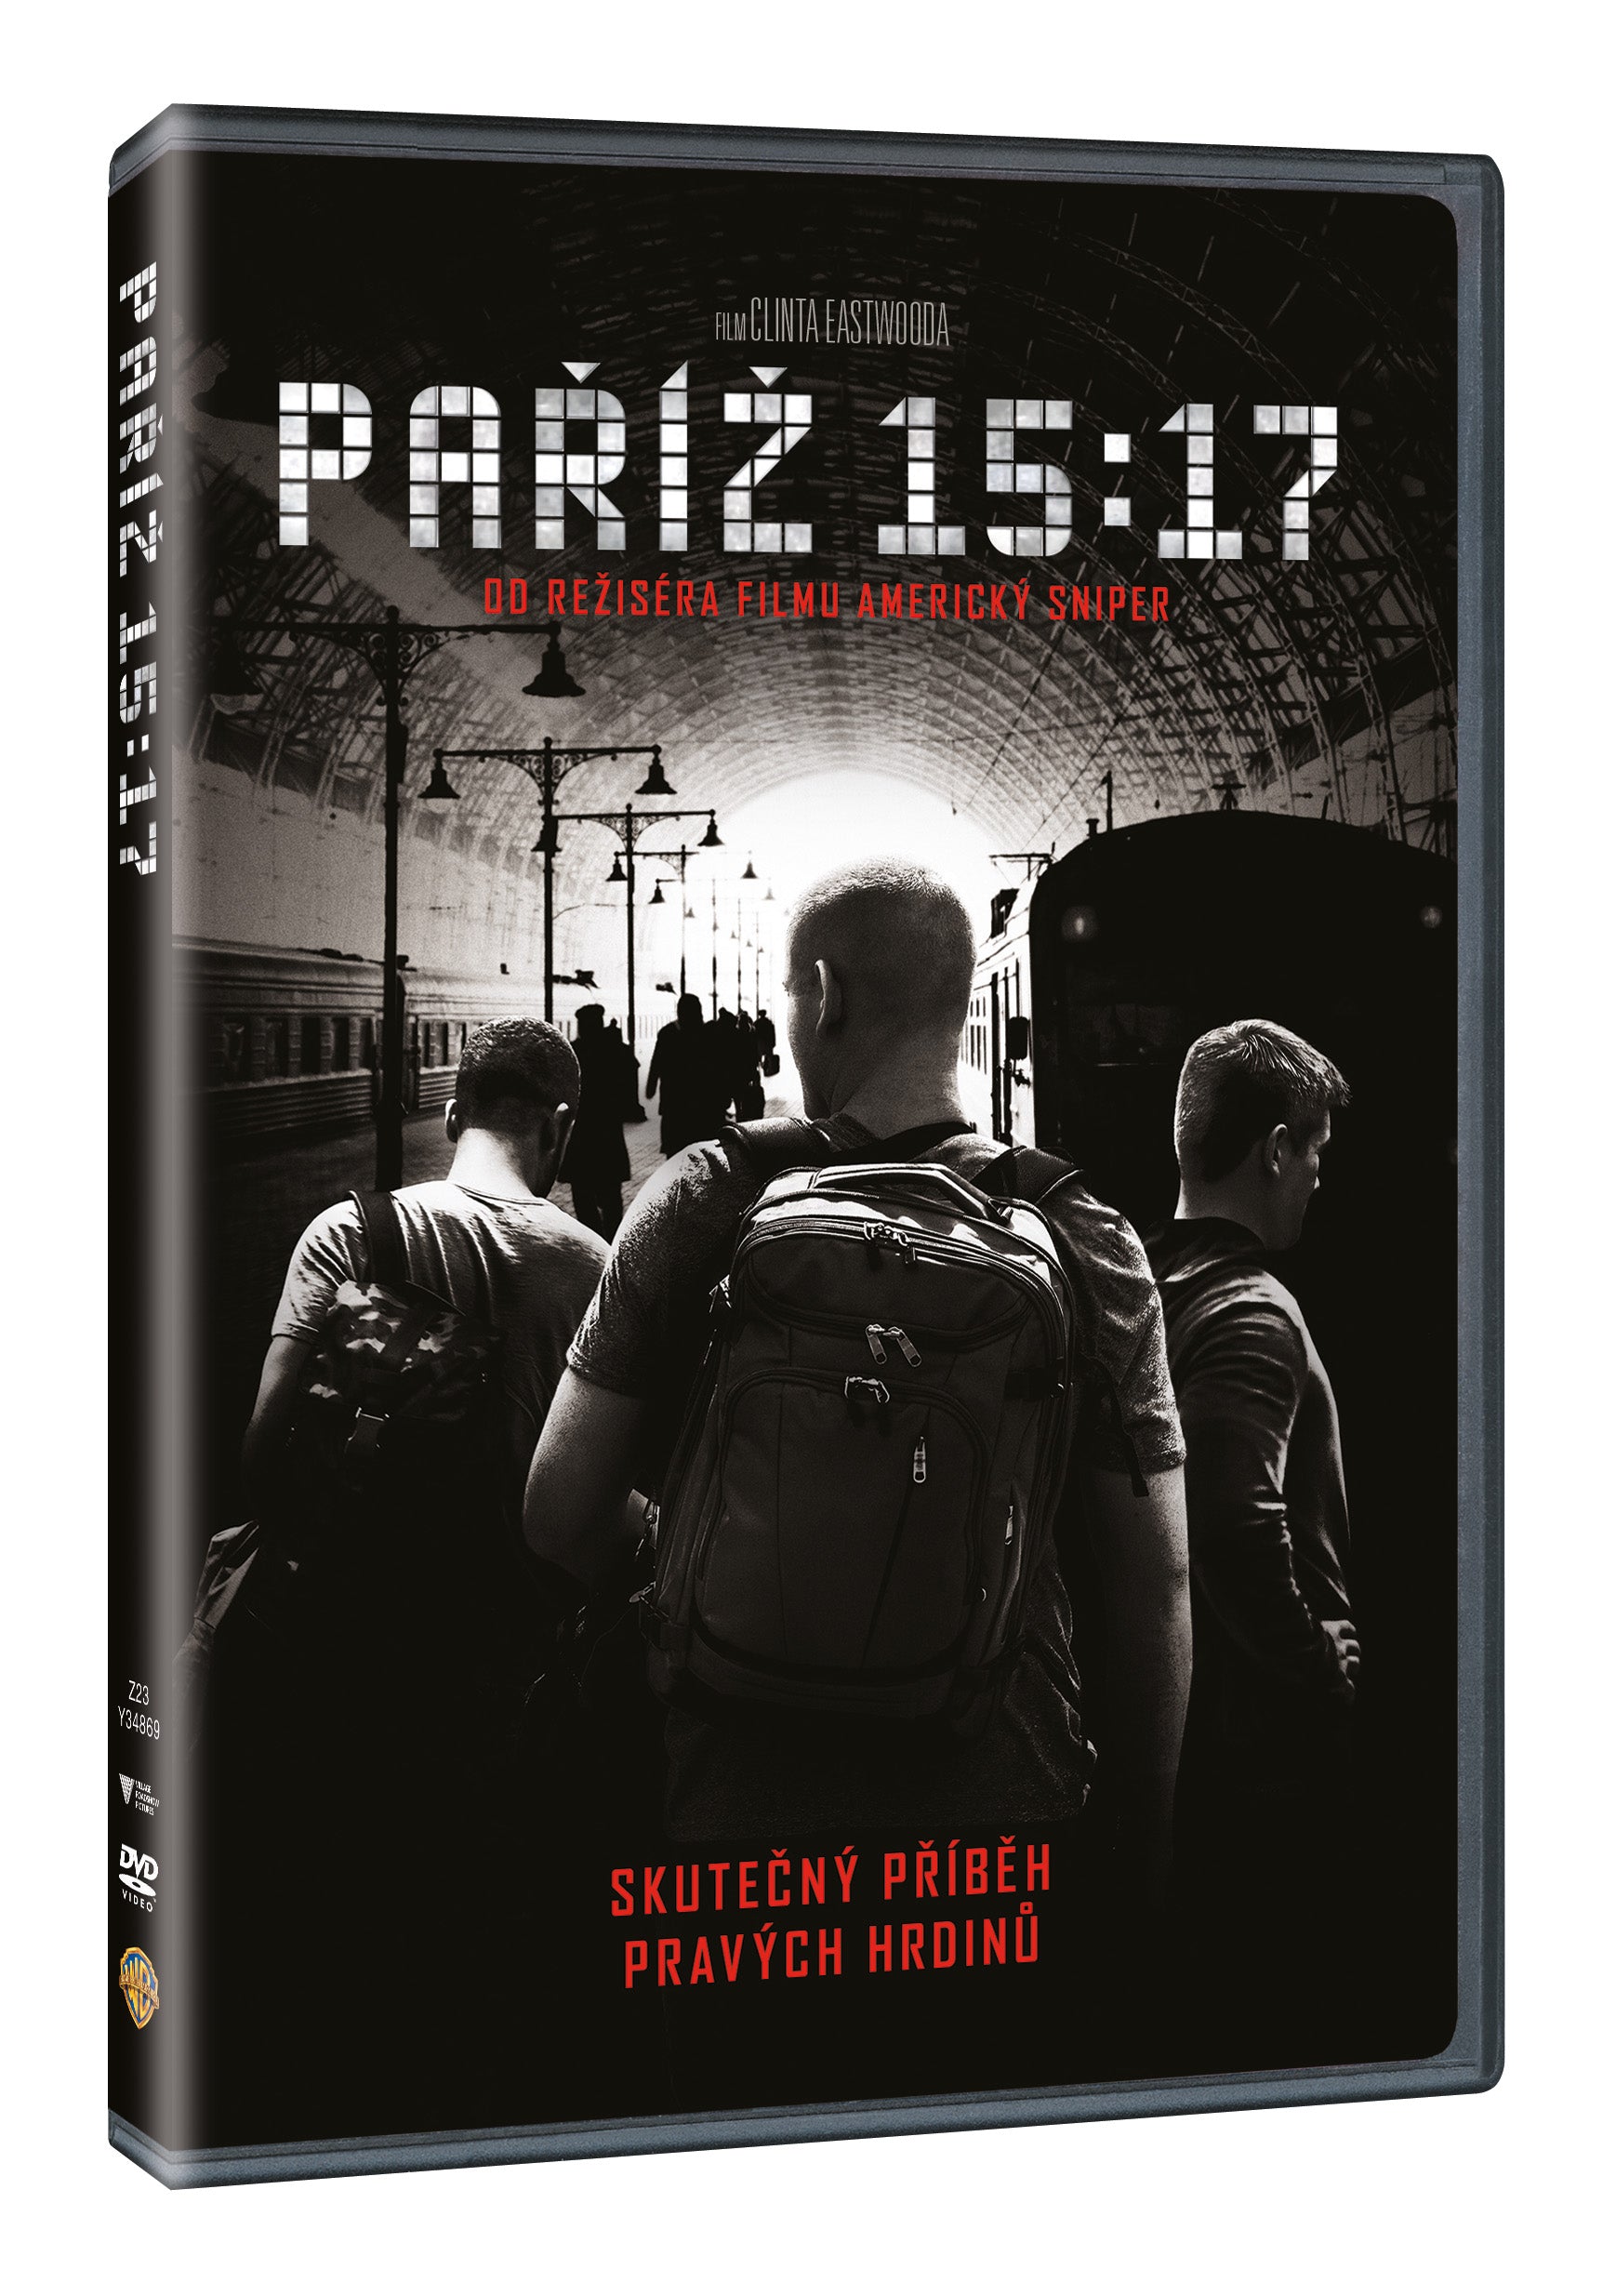 Pariz 15:17 DVD / The 15:17 to Paris